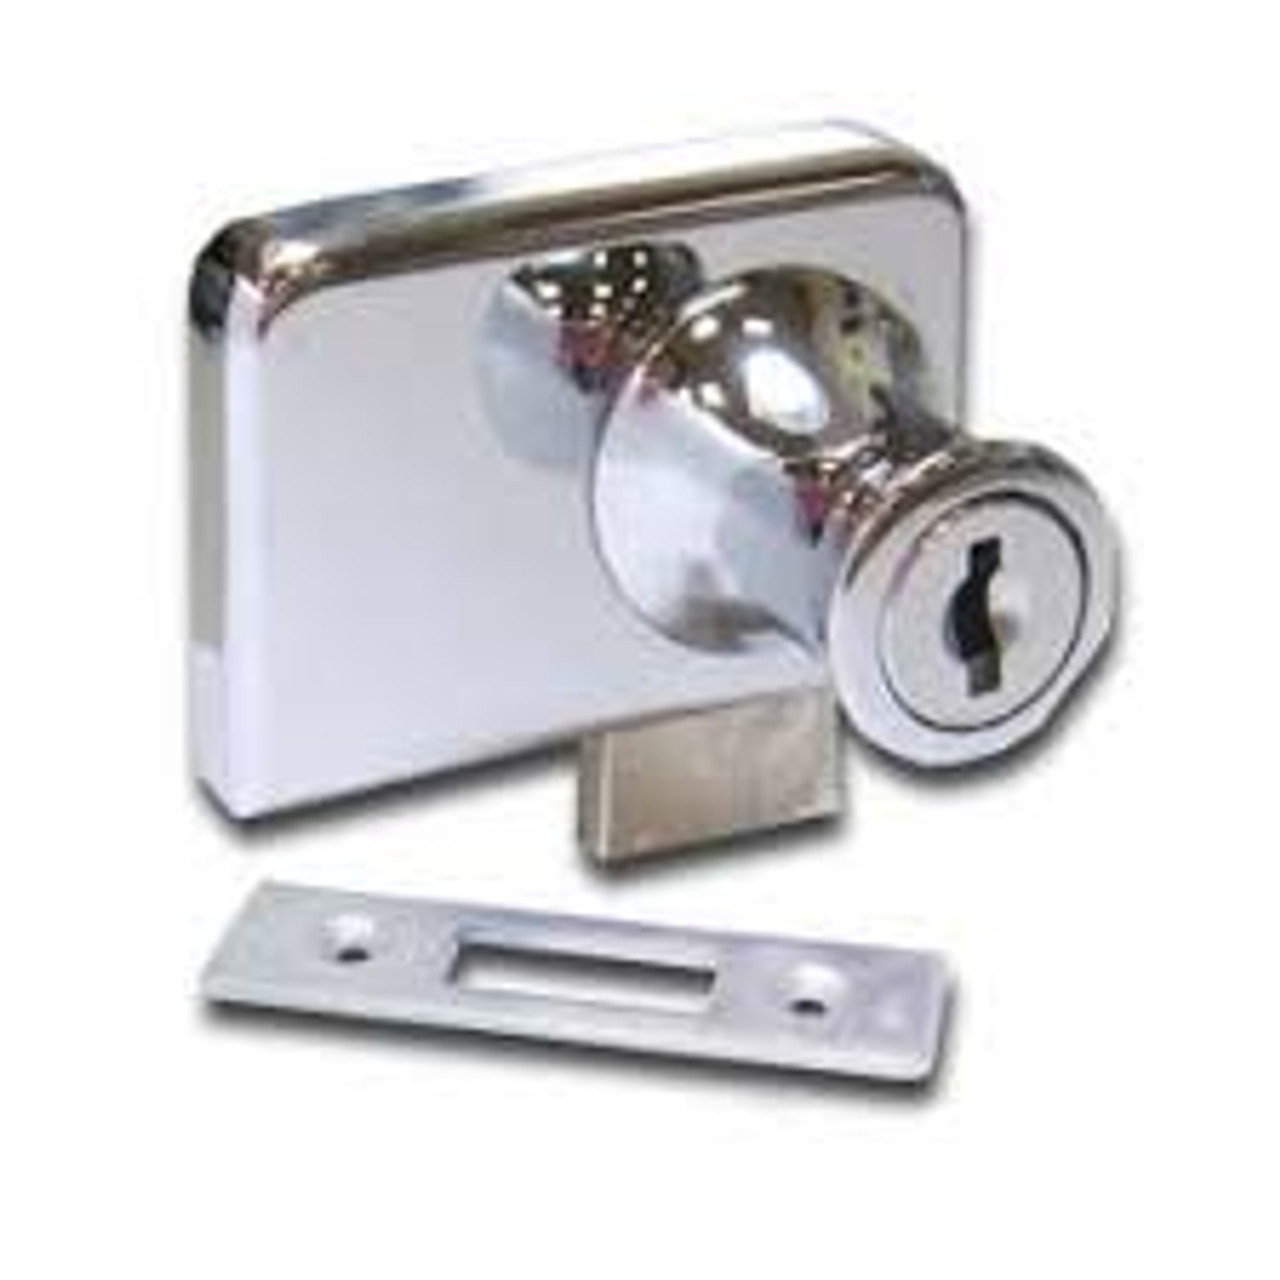 barrel cam lock glass display master key